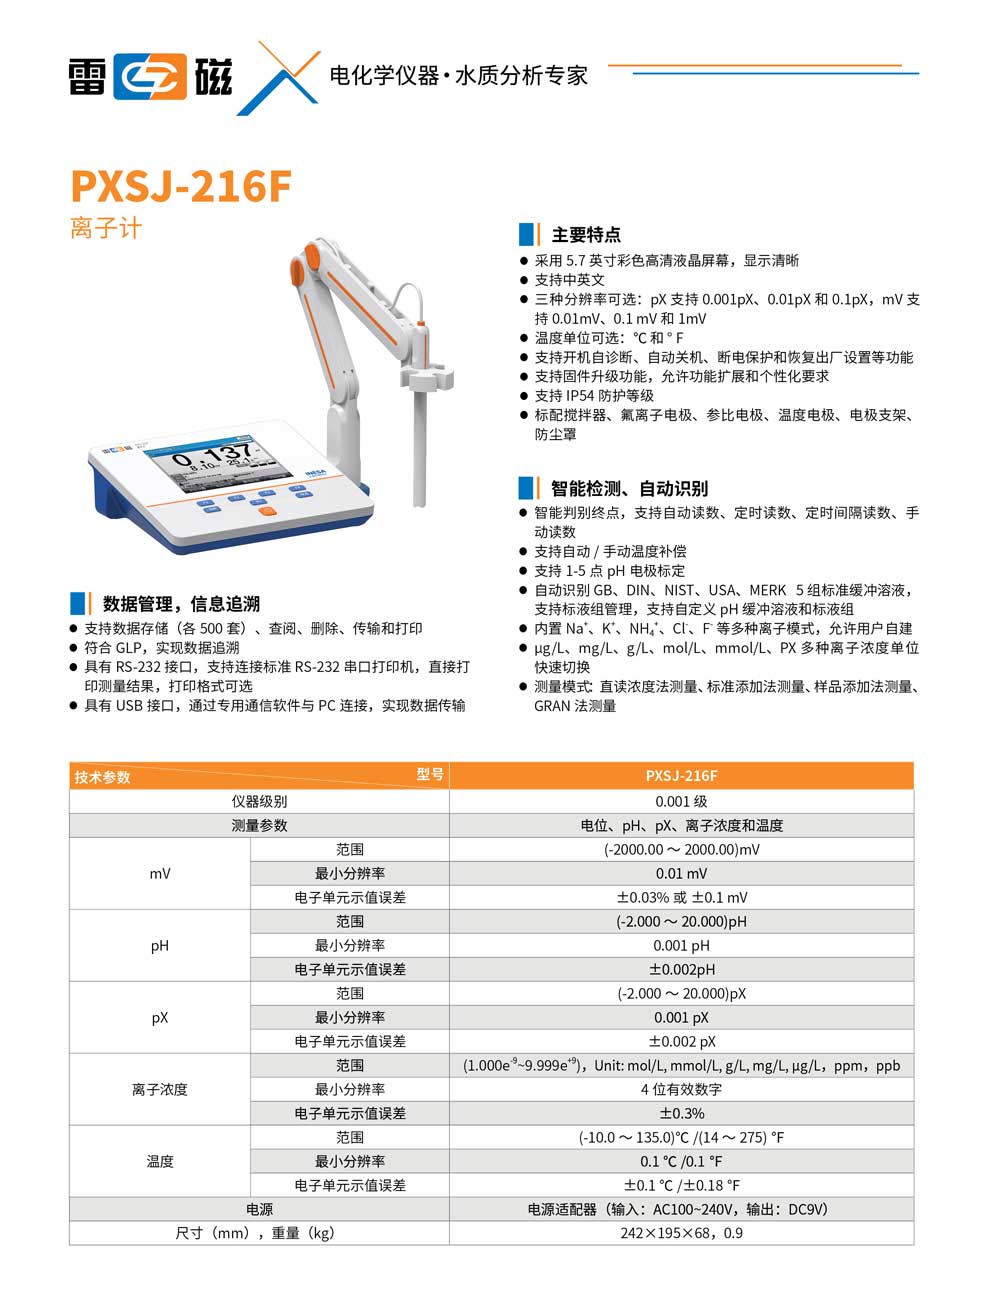 PXSJ-216F-彩.jpg